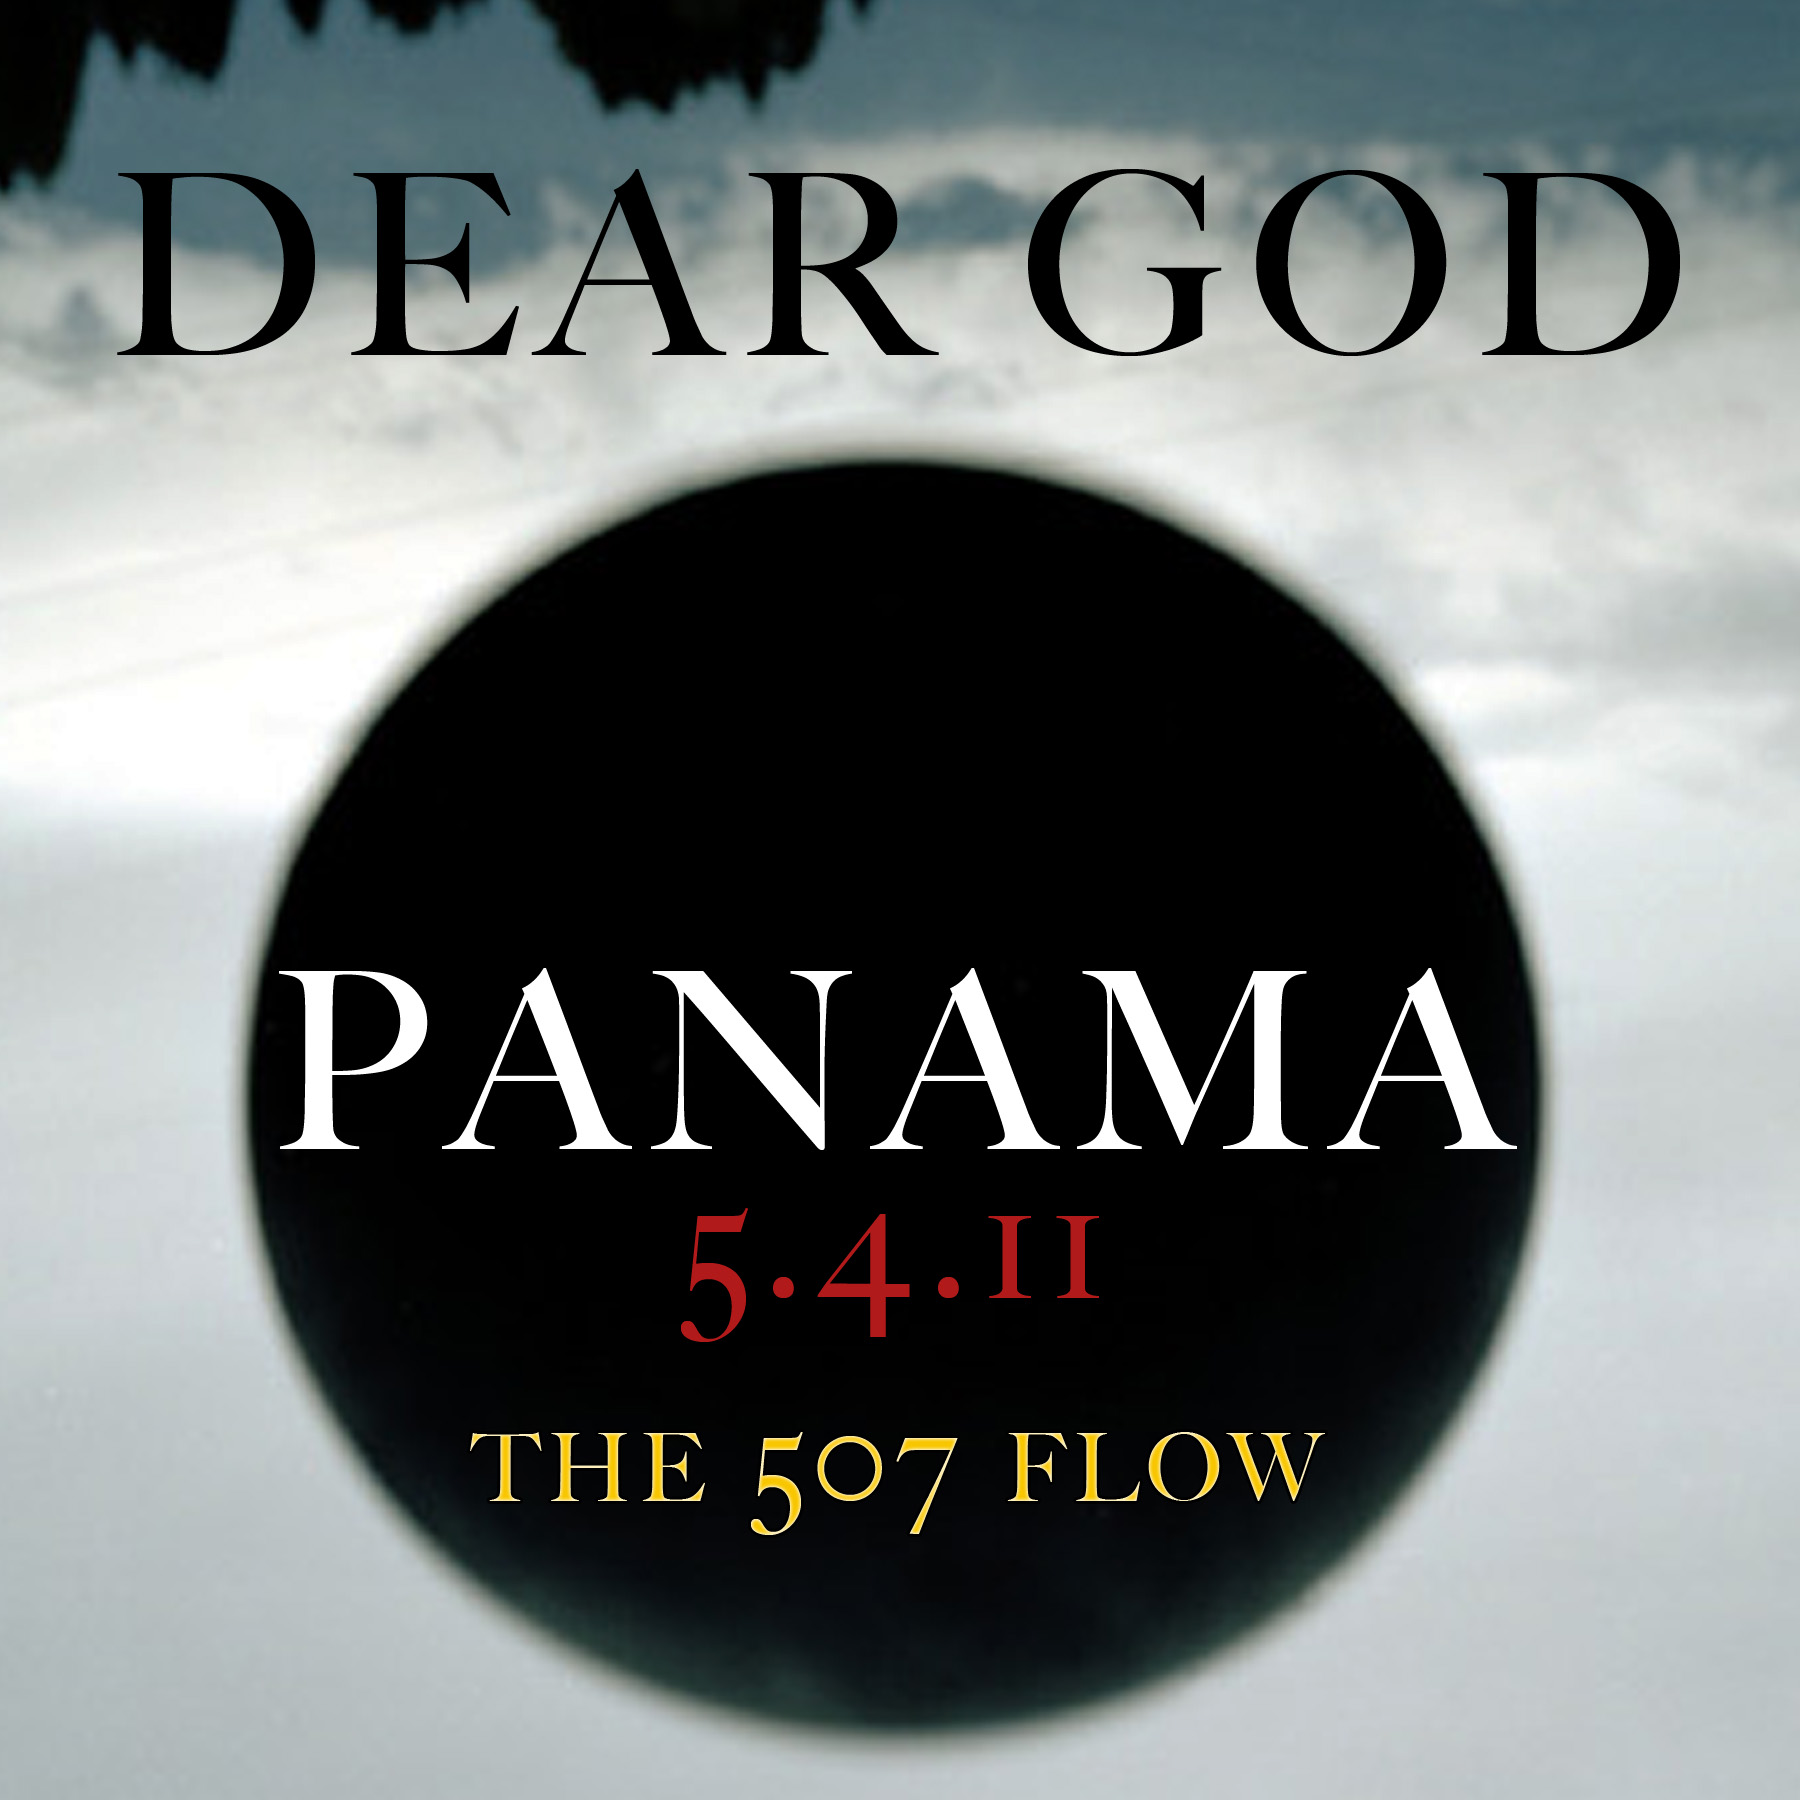 Audio: Panama – Dear God